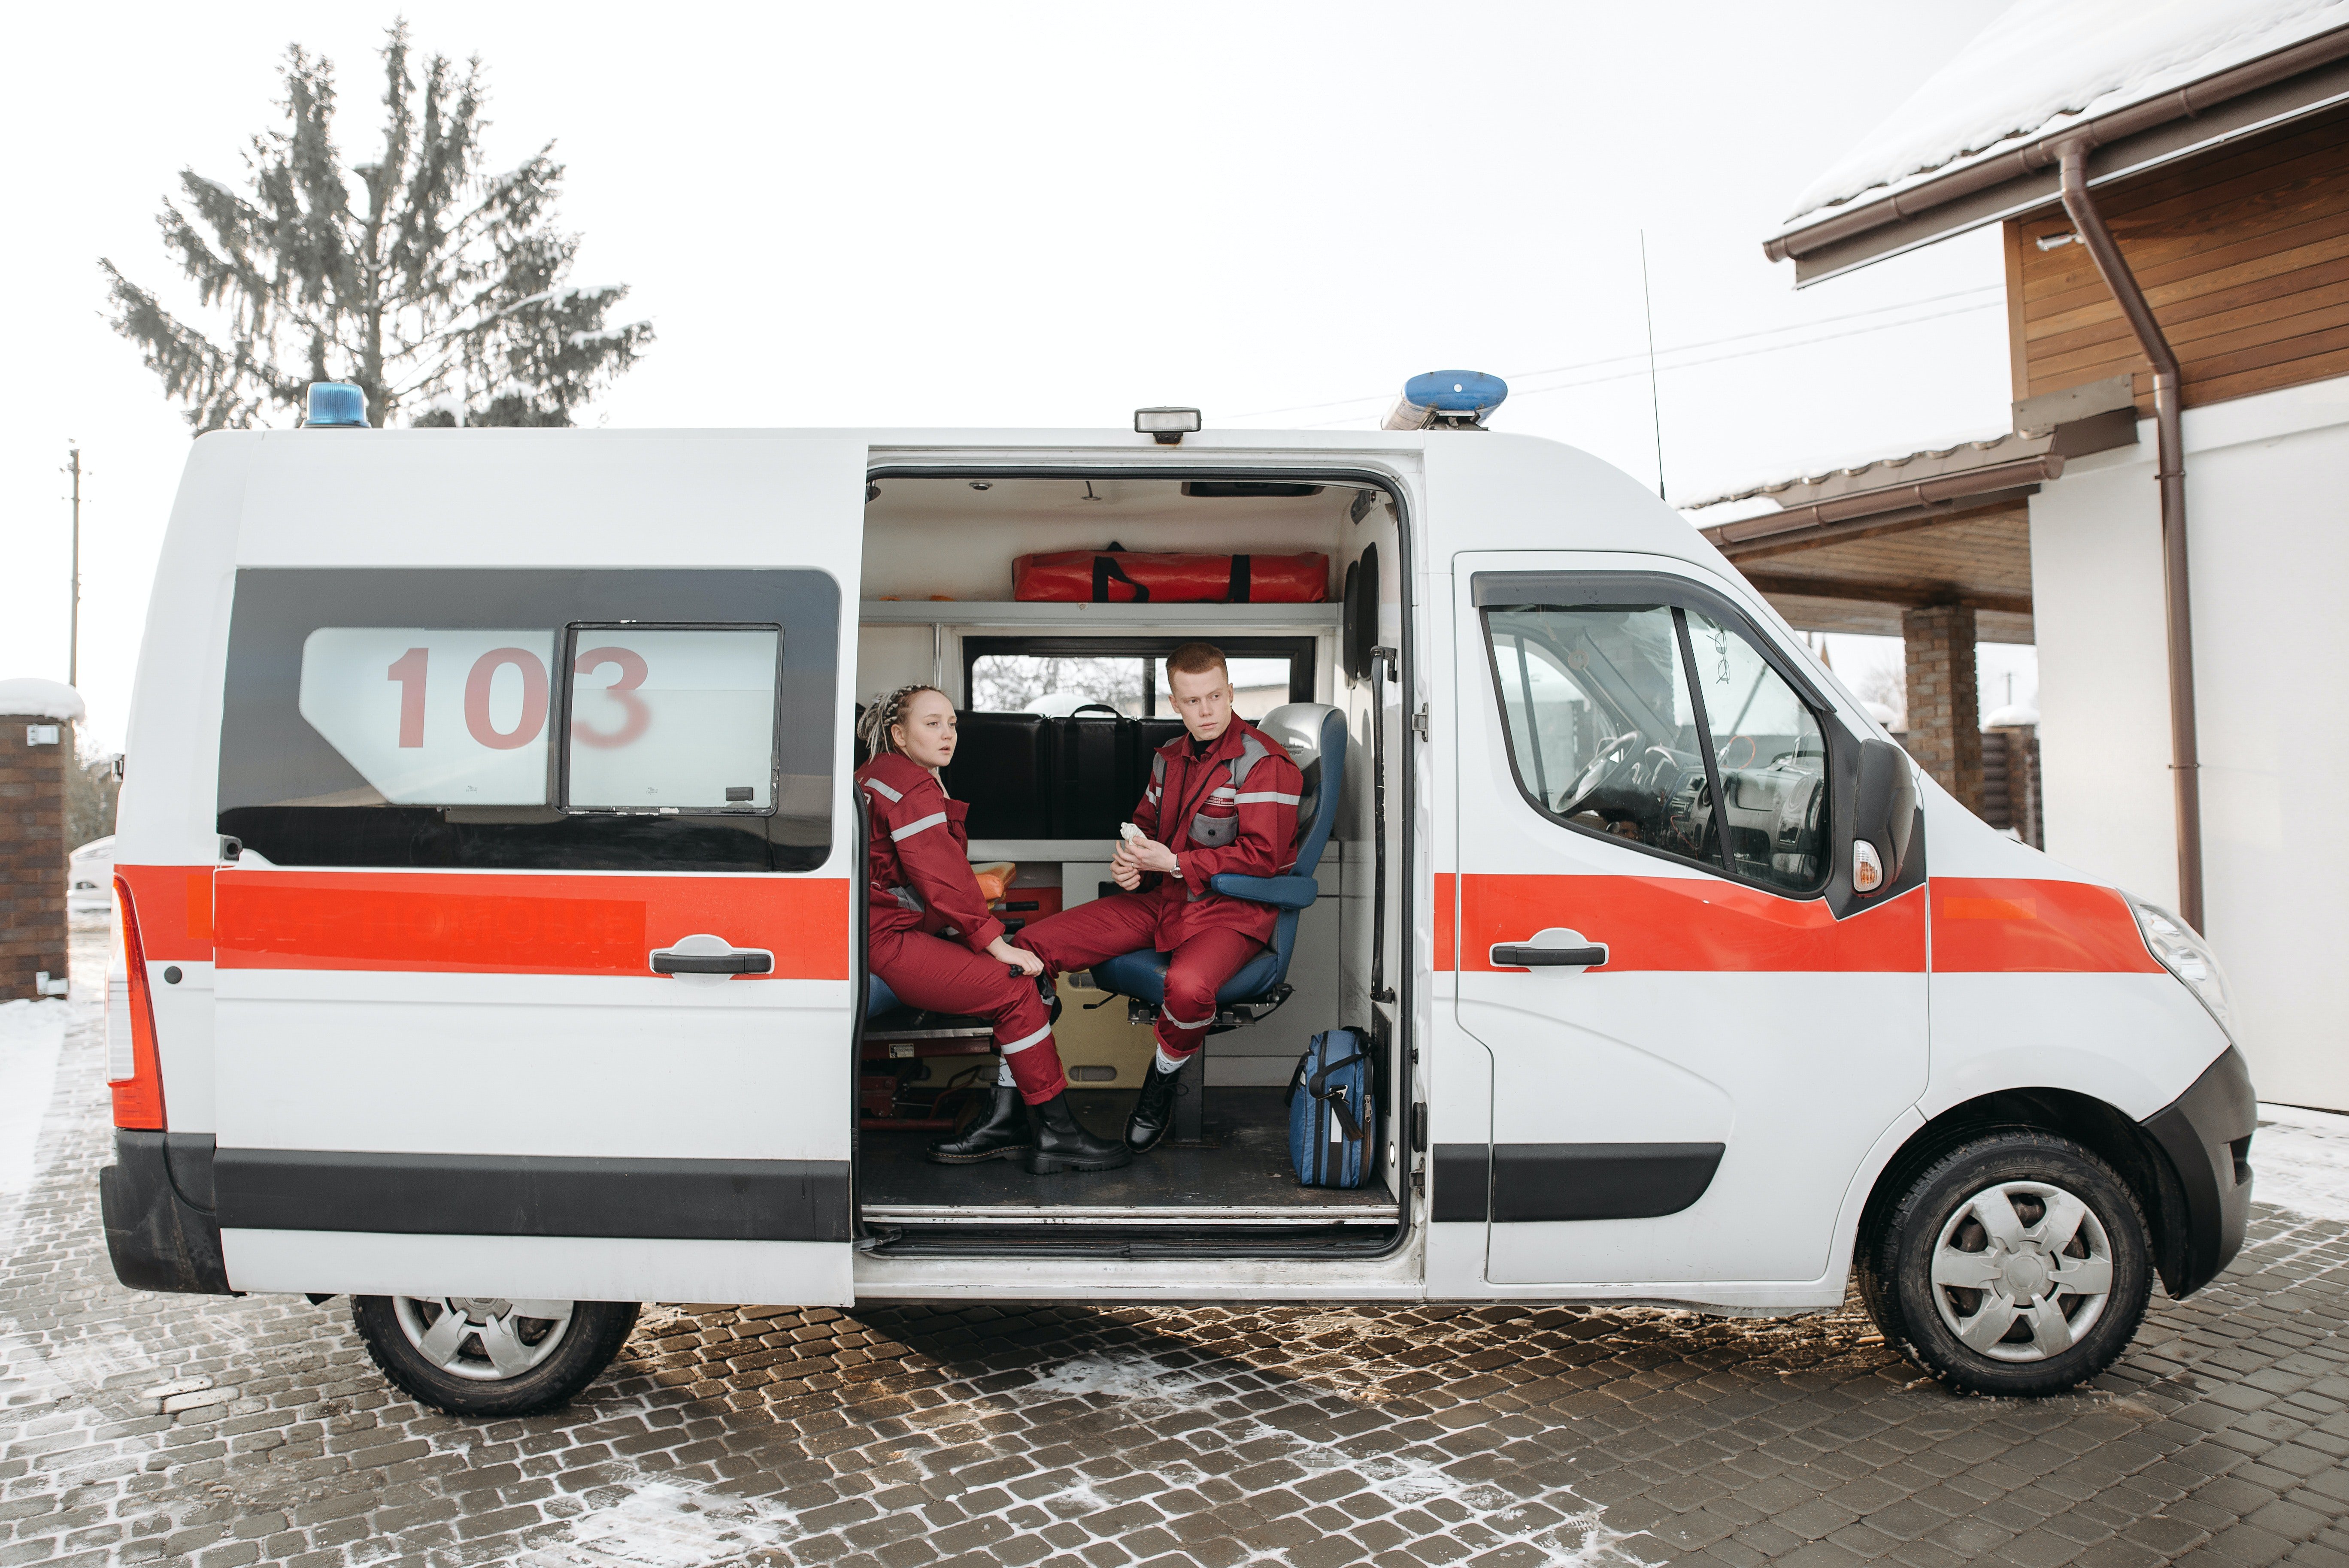 Paramédicos en una ambulancia. | Foto: Pexels